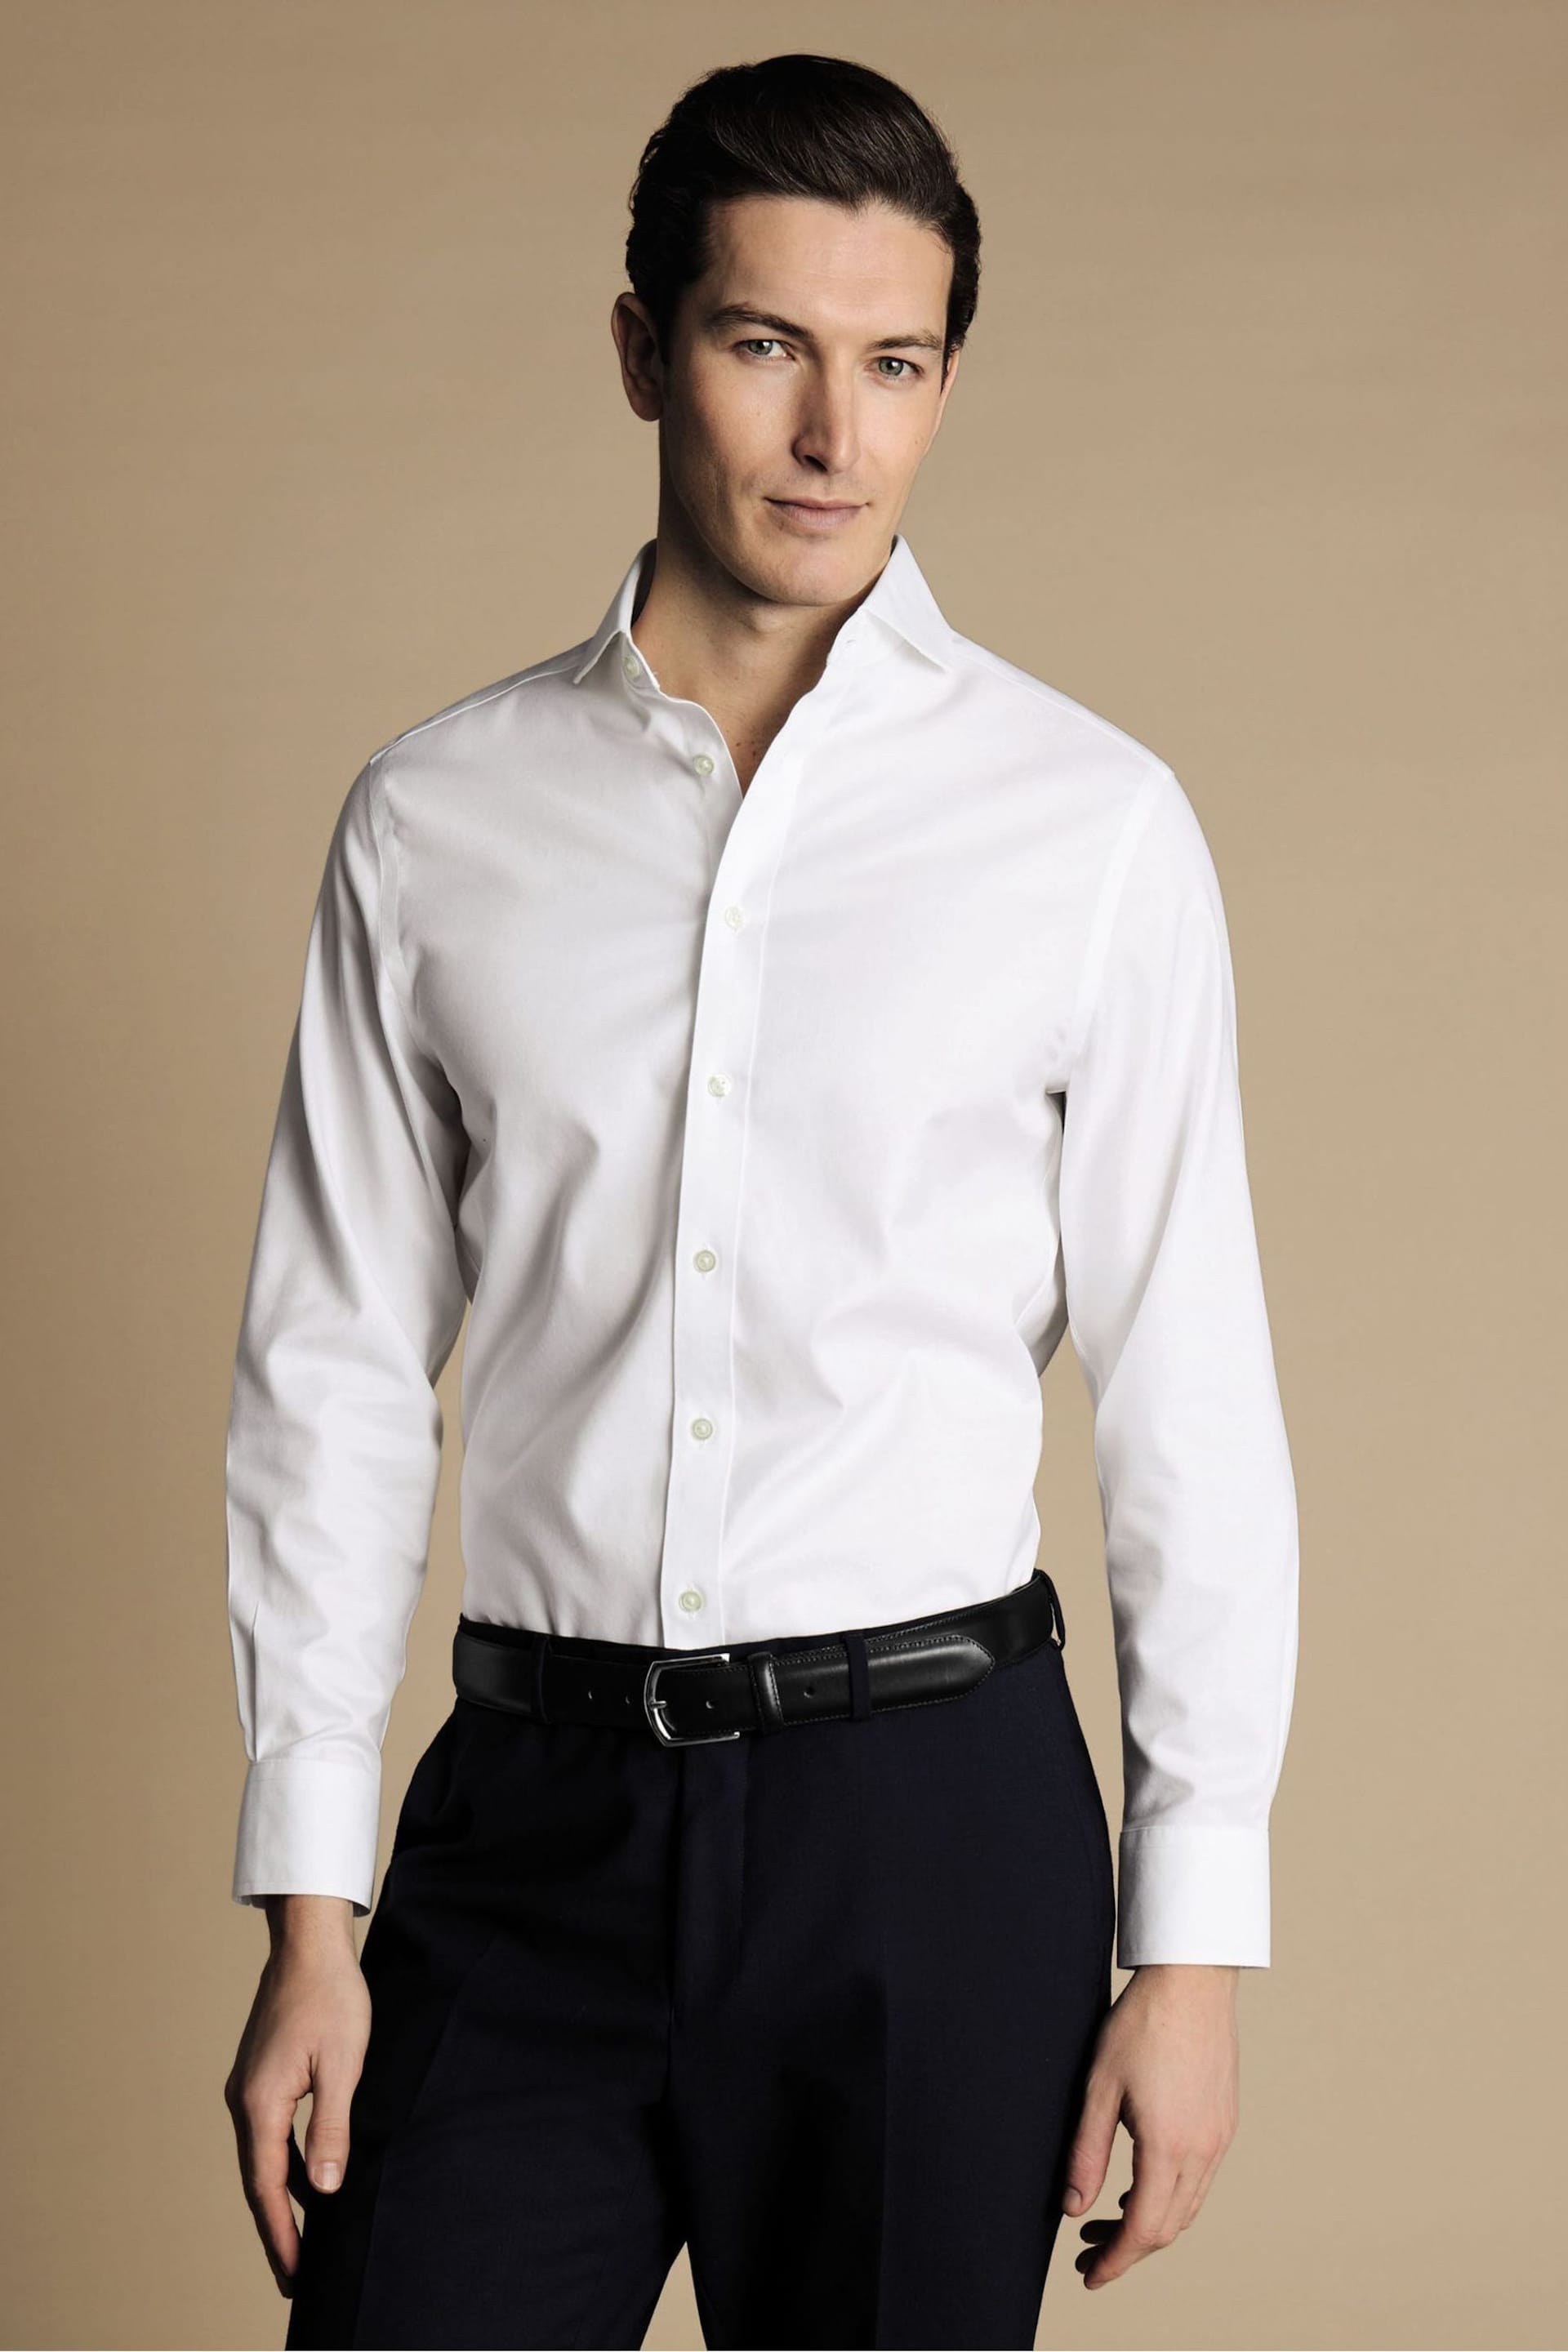 Charles Tyrwhitt White Non-iron Twill Extreme Cutaway Slim Fit Shirt - Image 1 of 5